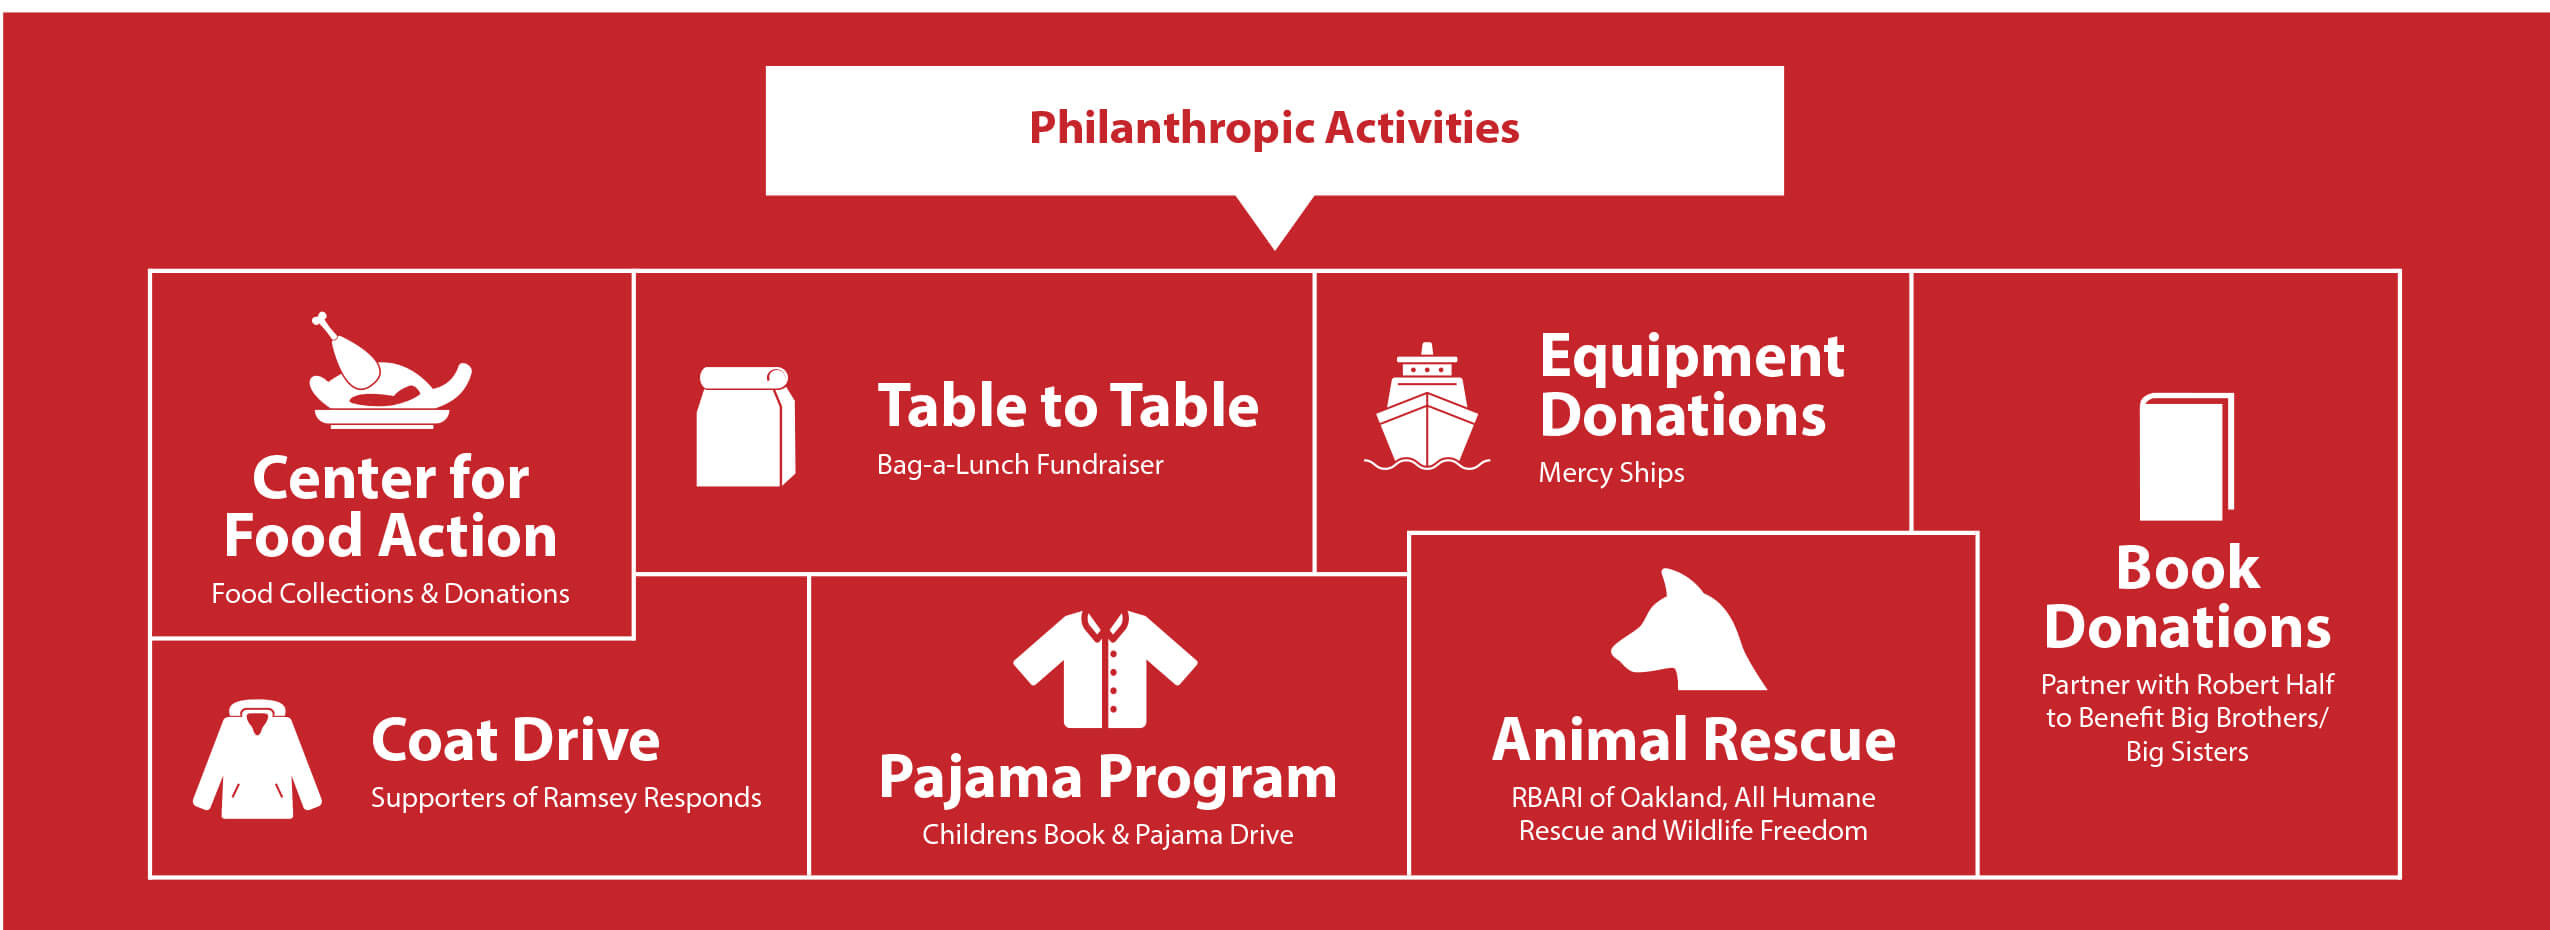 Philanthropic-Activities-for-web